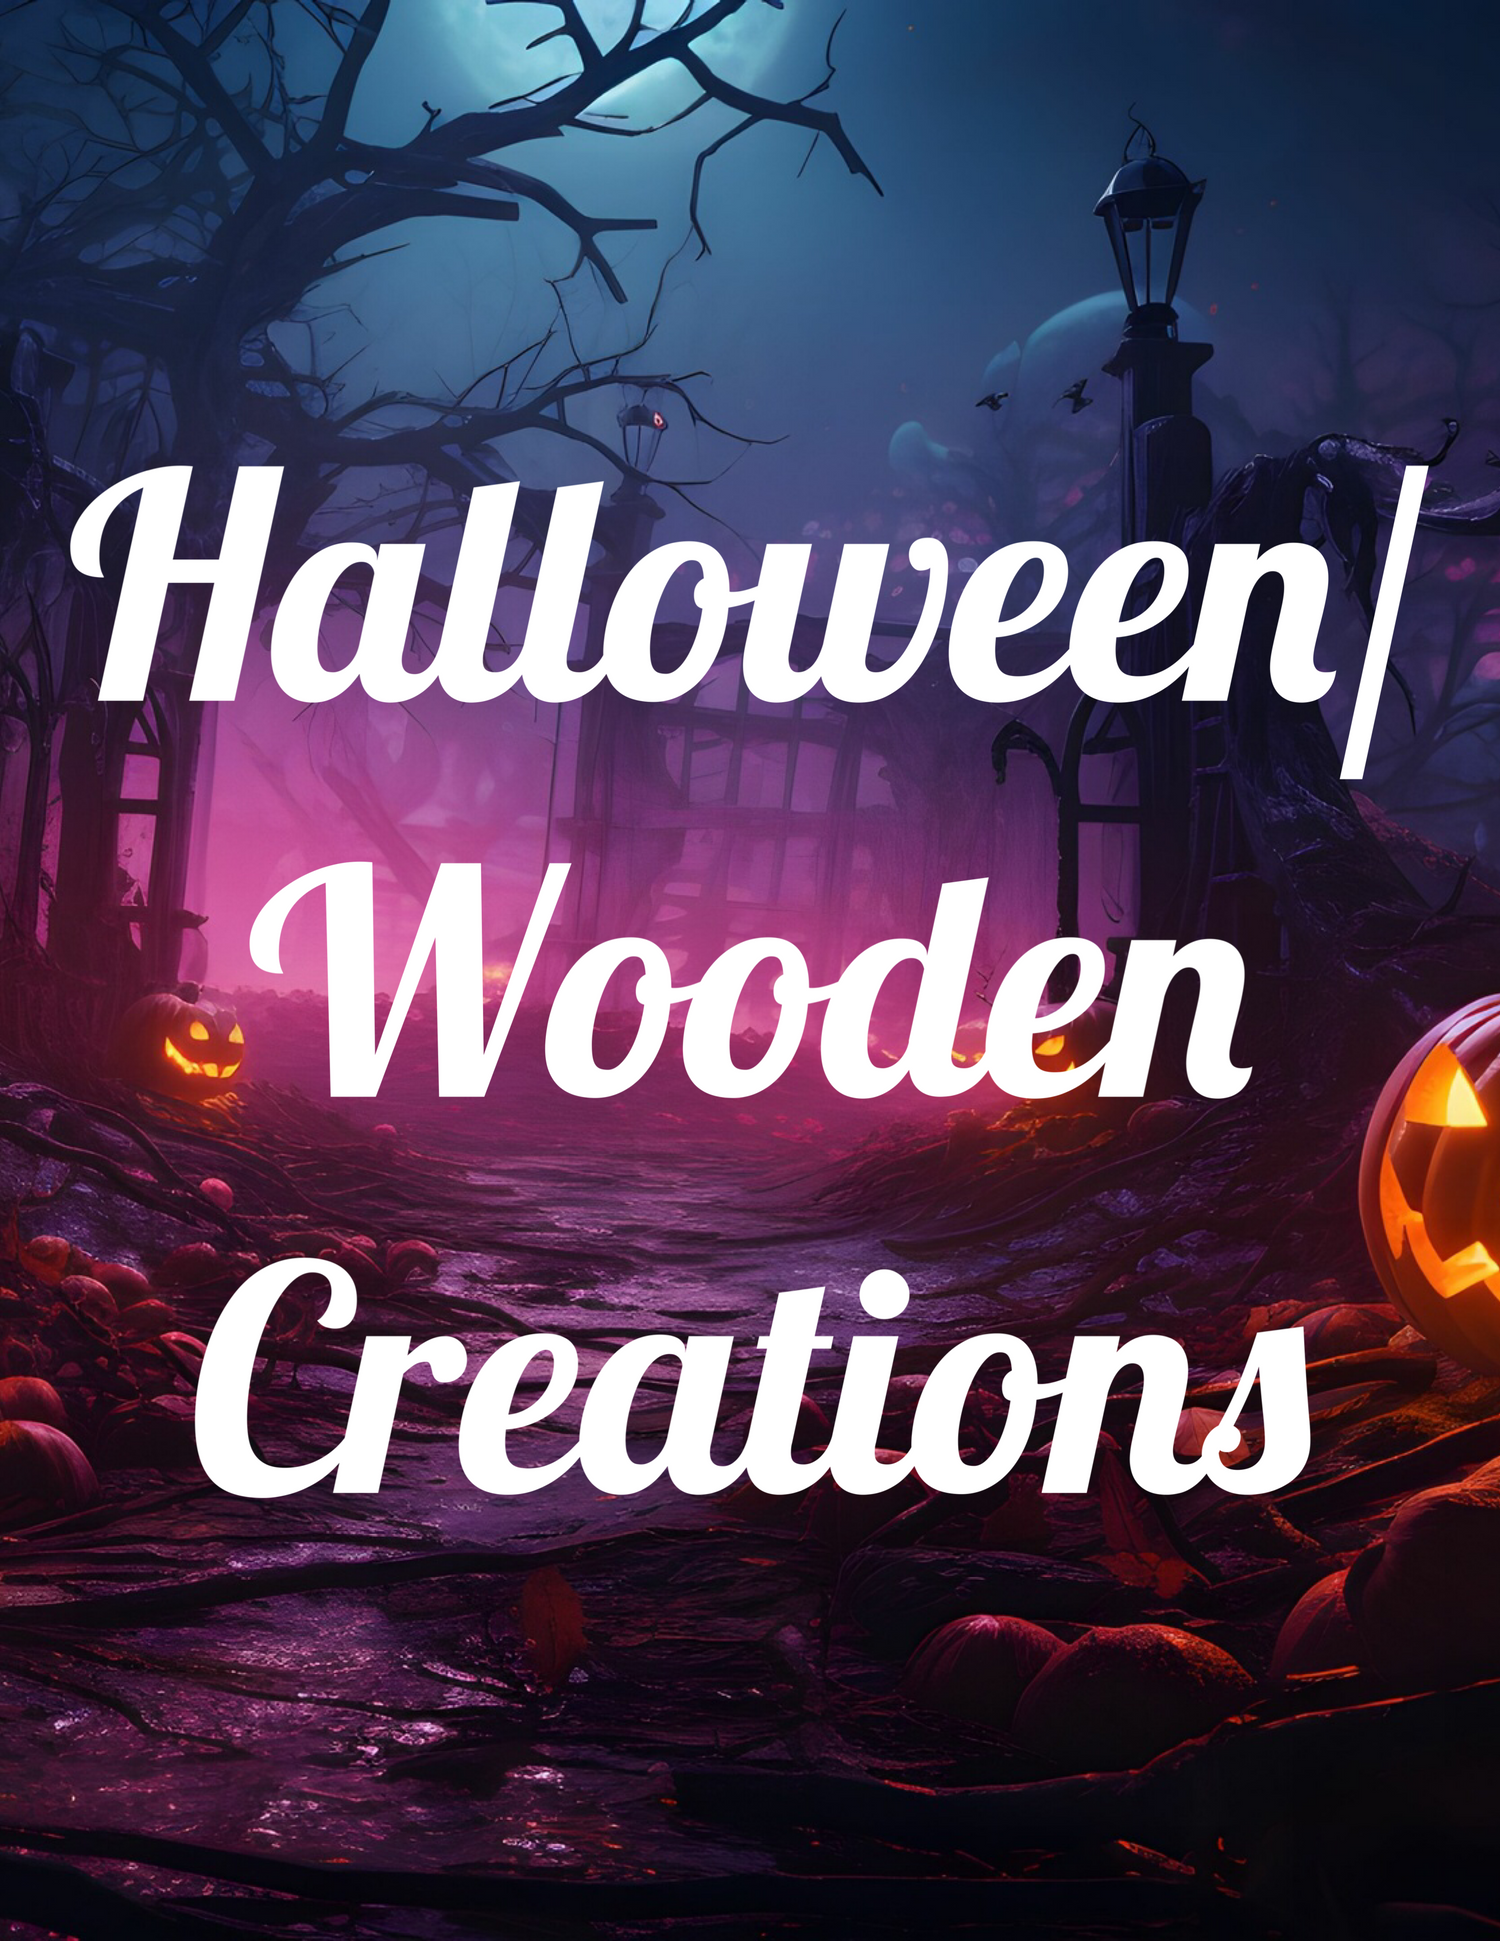 Happy Halloween/ Wood Creations